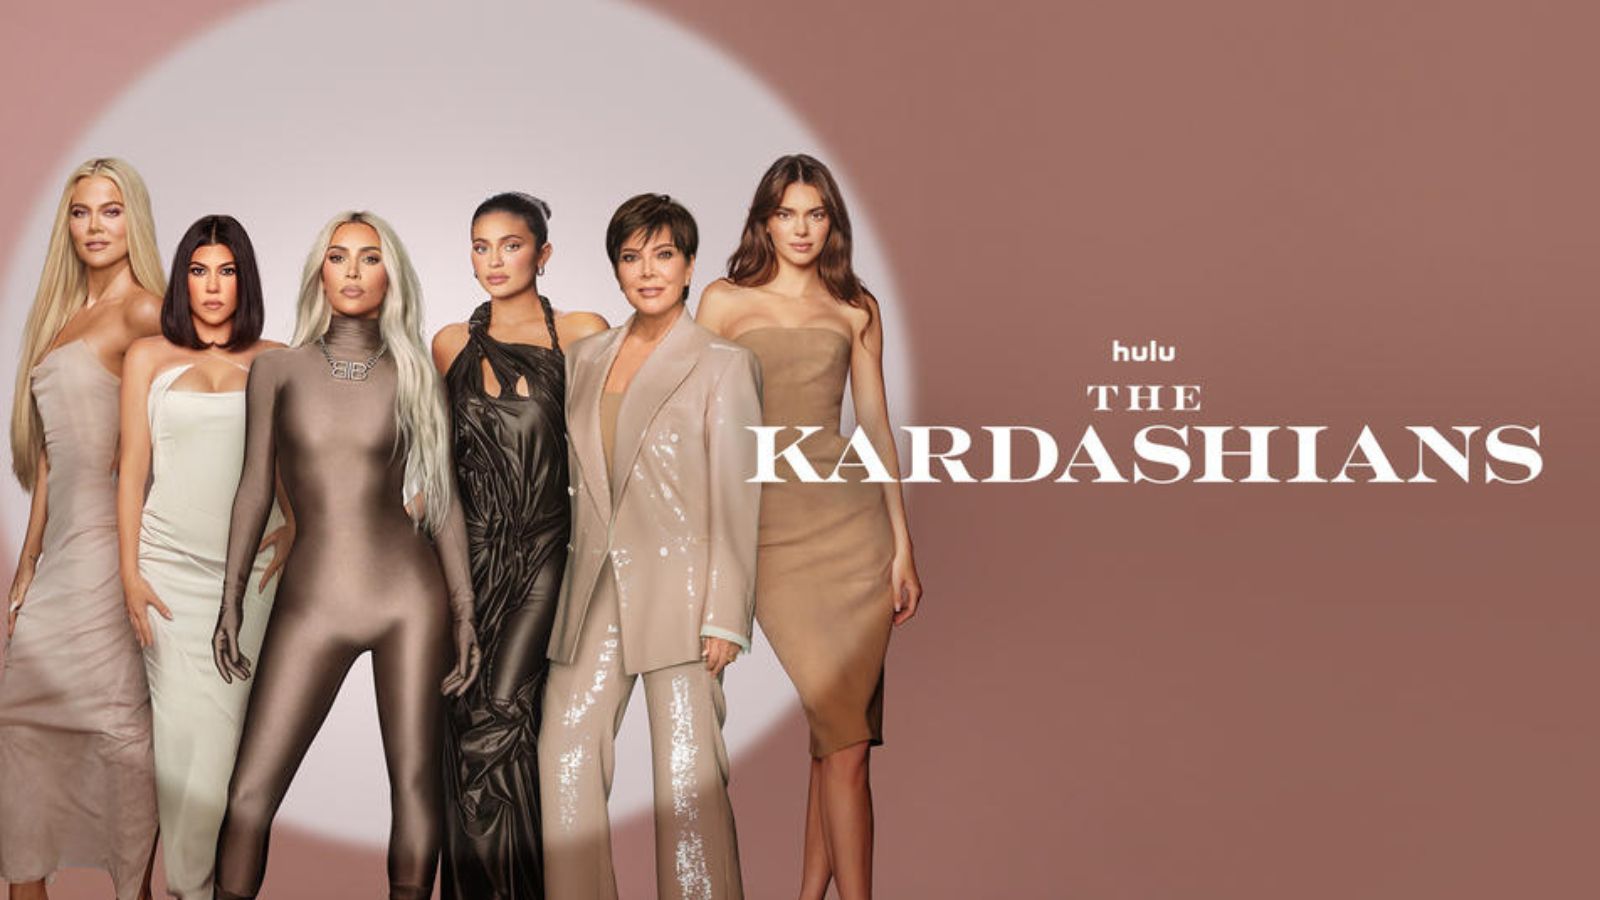 Are The Kardashians getting a season 5?